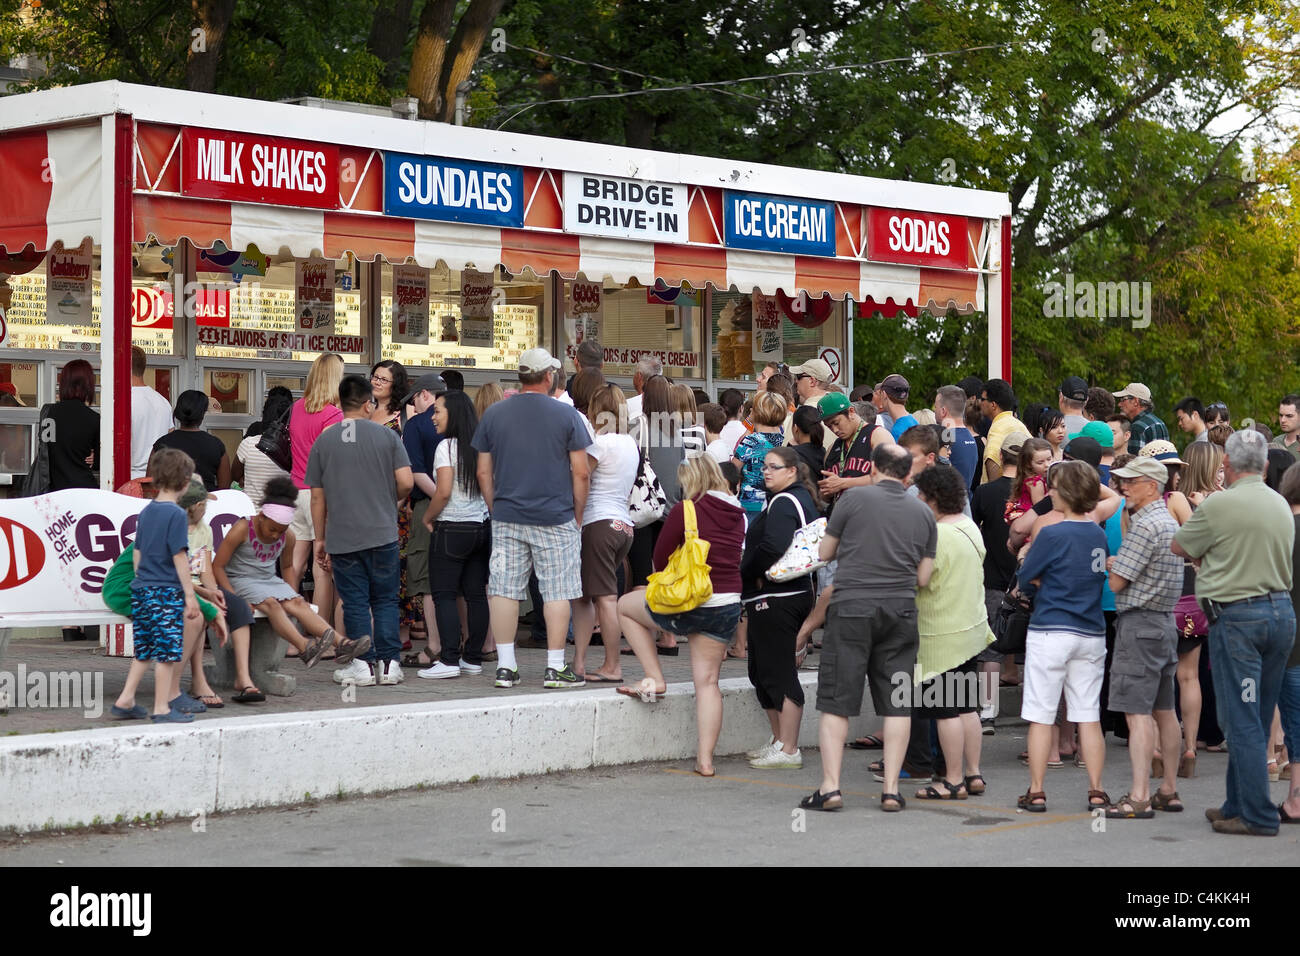 People waiting in line for ice cream, Bridge Drive-In, Winnipeg, Manitoba, Canada. Stock Photo